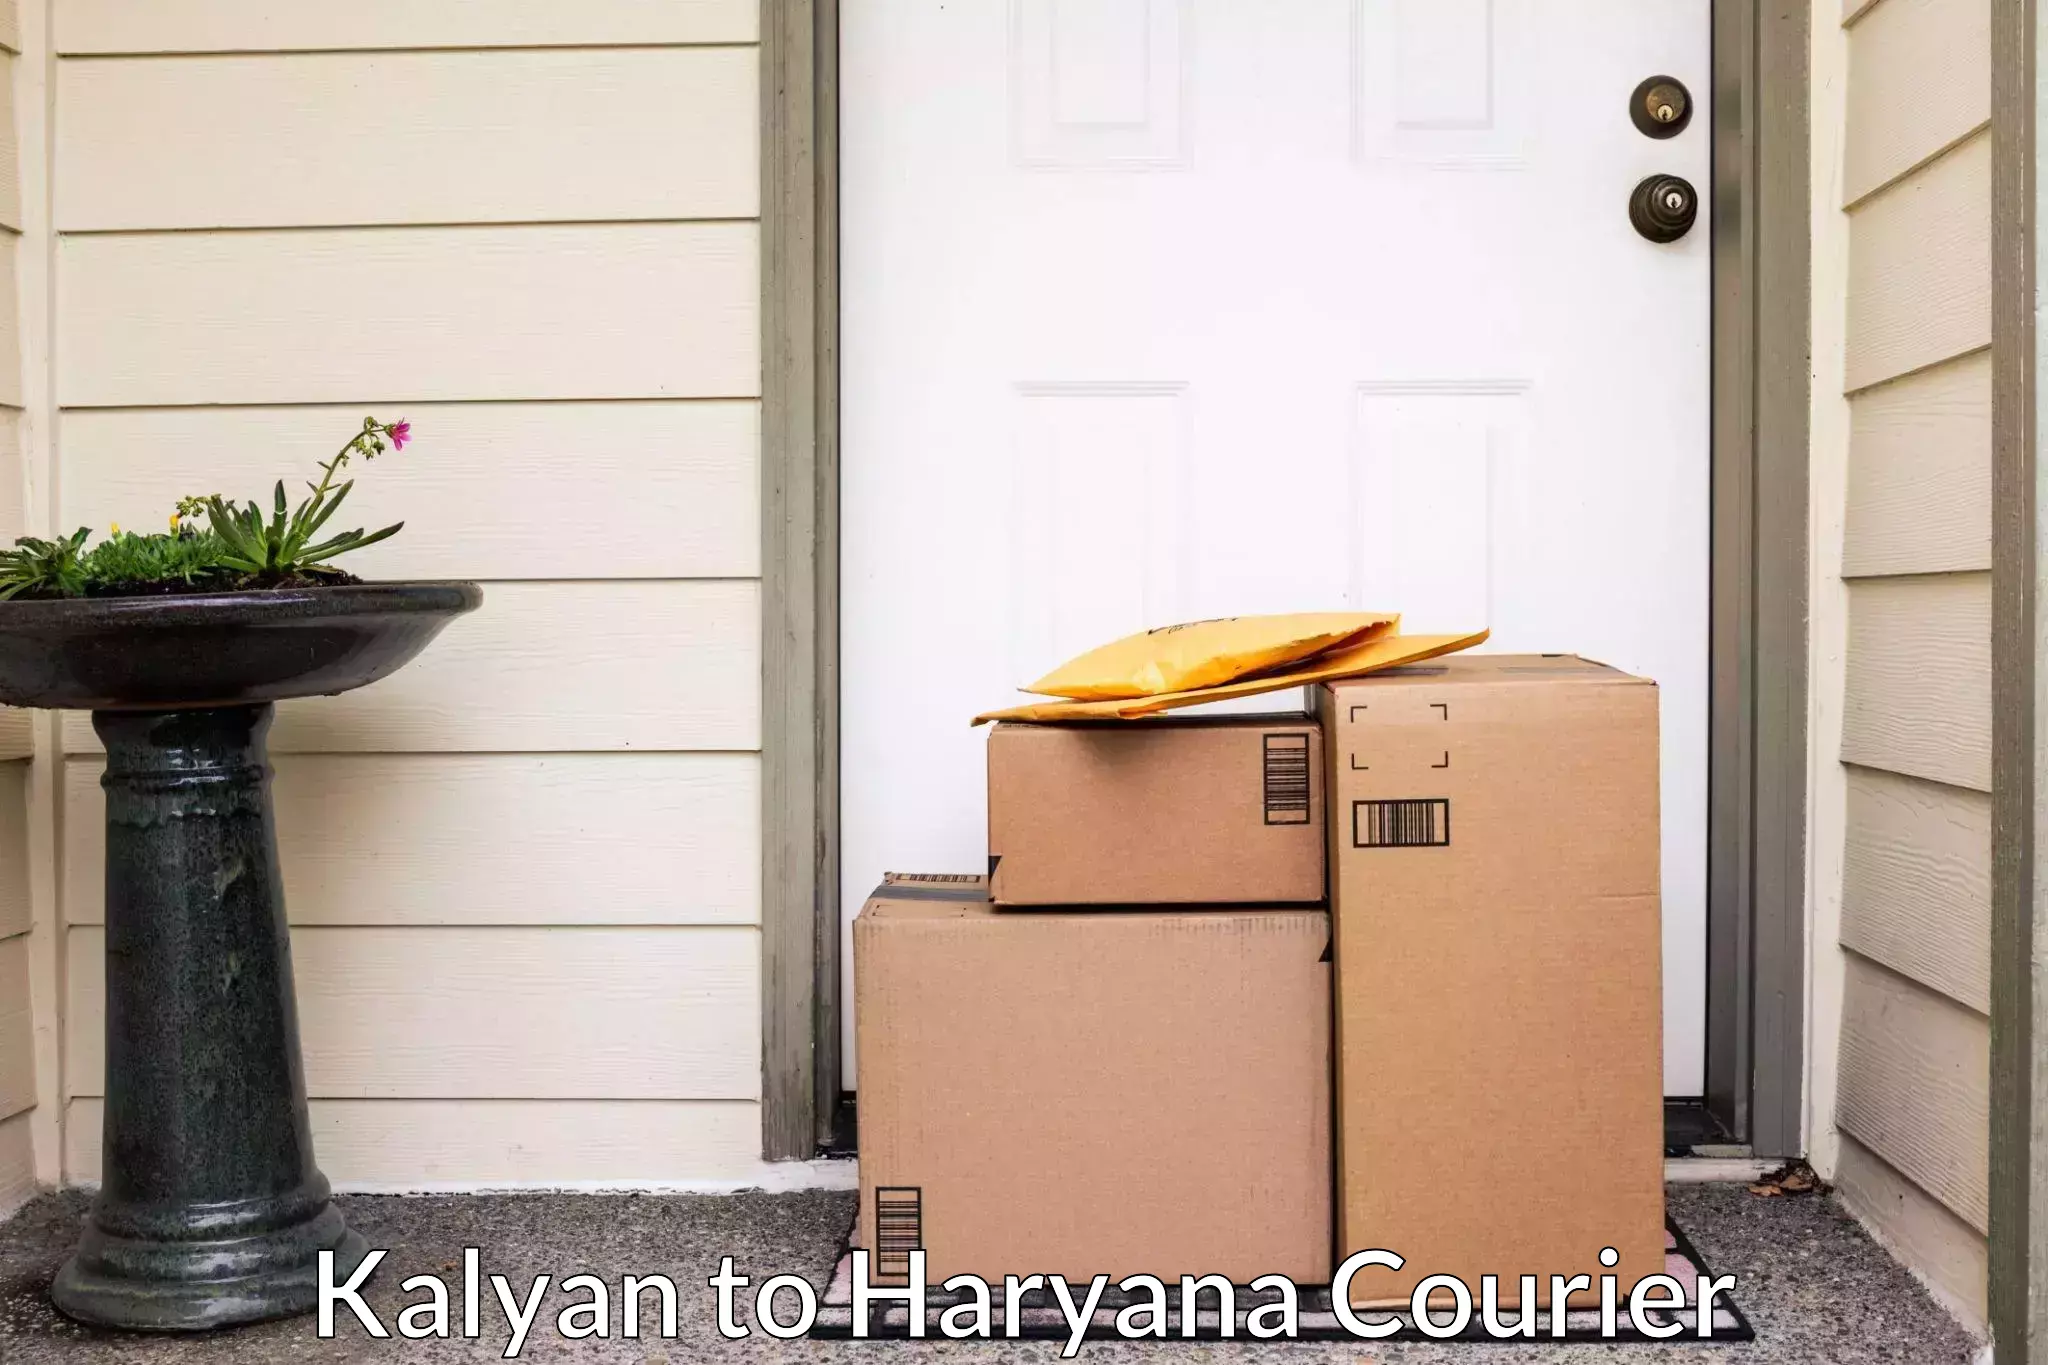 Professional home movers Kalyan to NCR Haryana